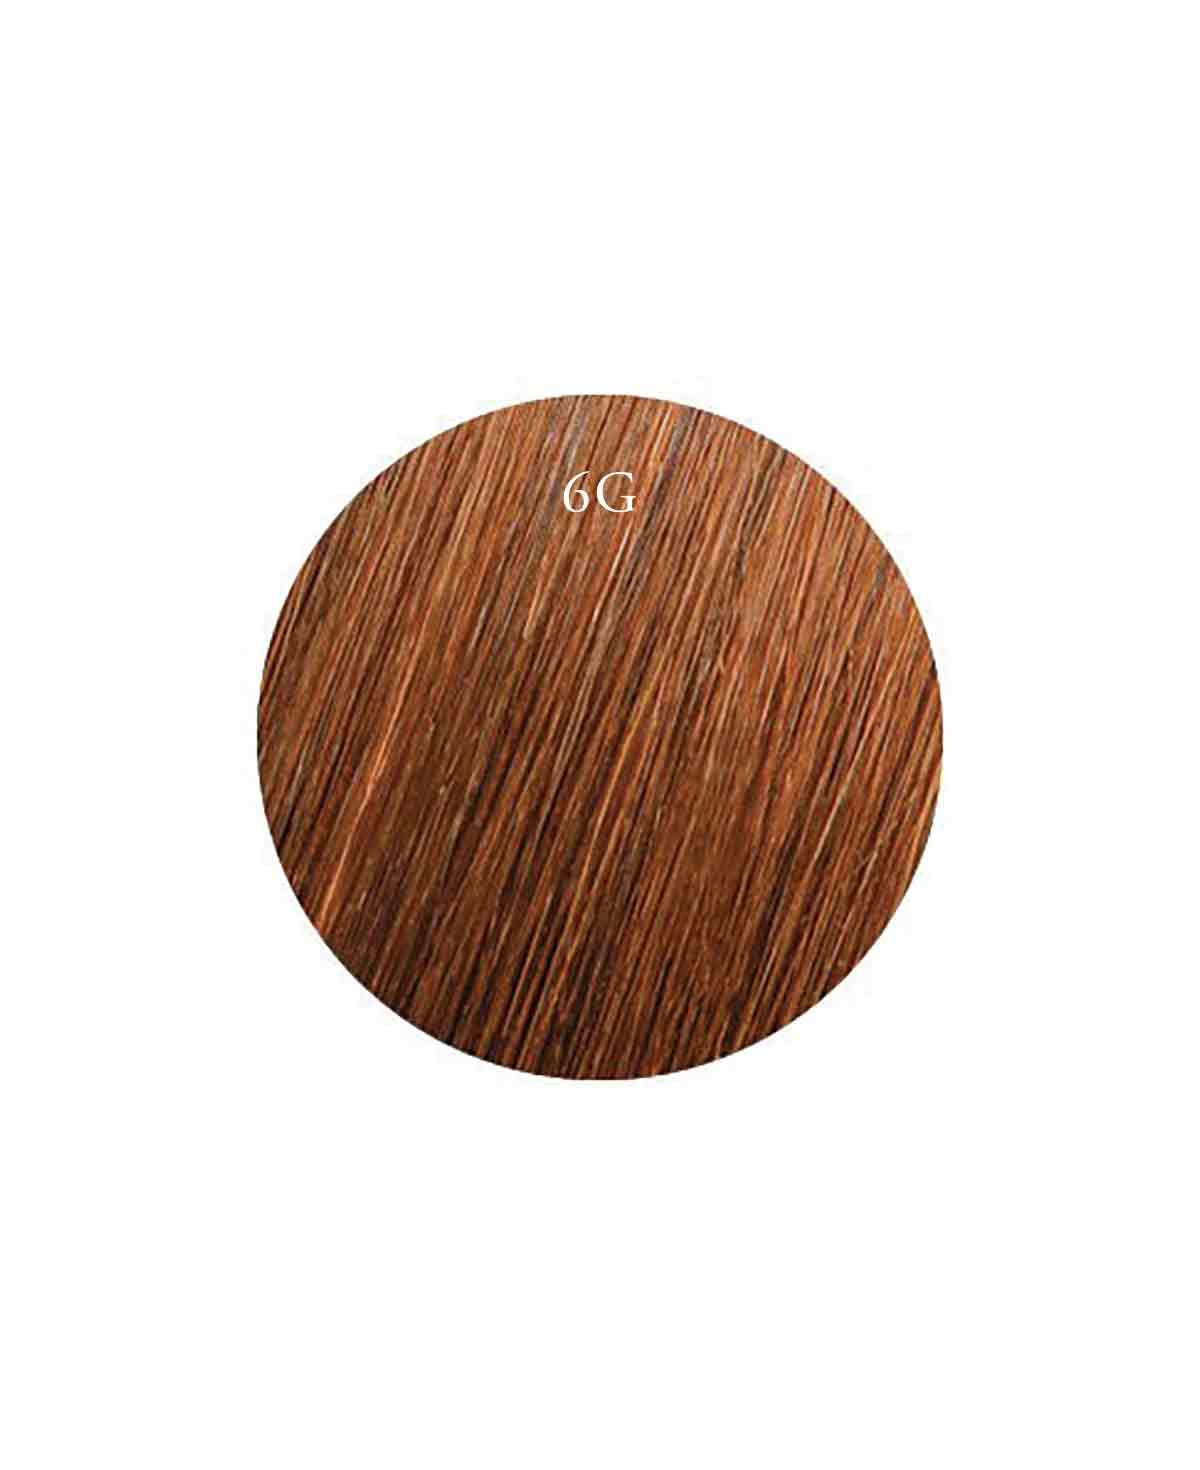 Showpony 45-50cm (20") 3 in 1 HALO Hair Exstension - 6G Chestnut 